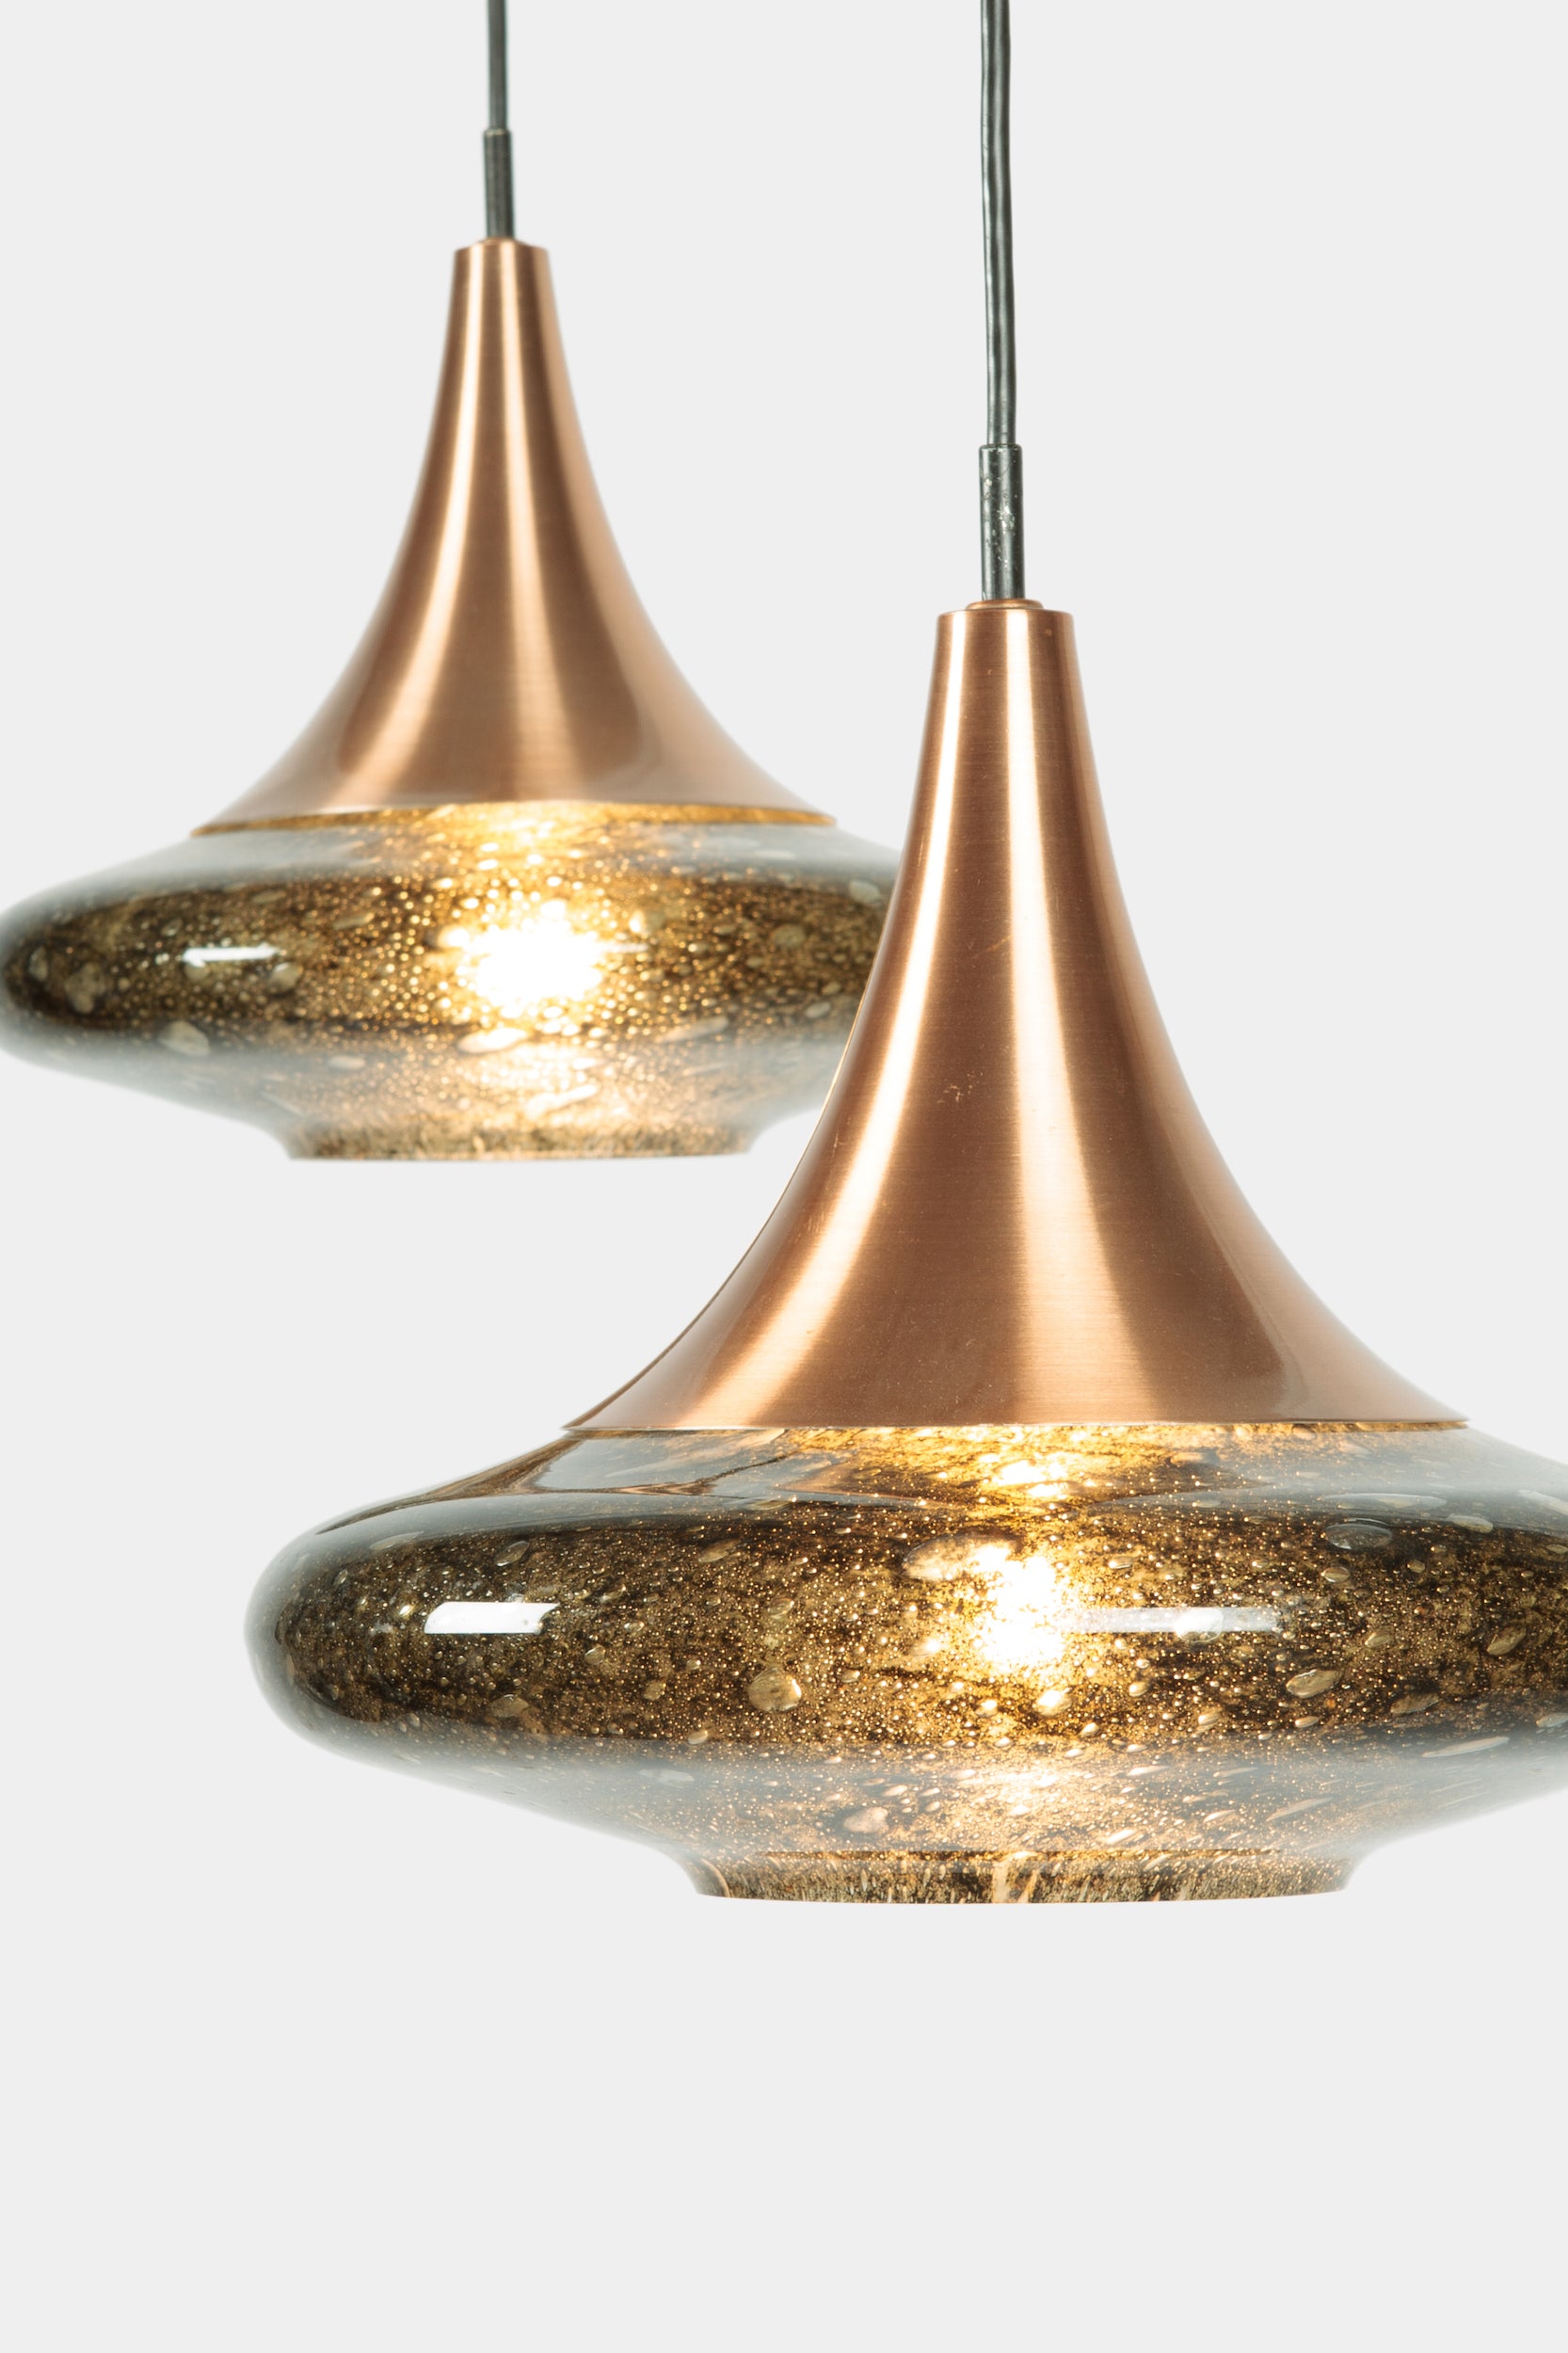 2 beautiful Doria glass lamps with copper